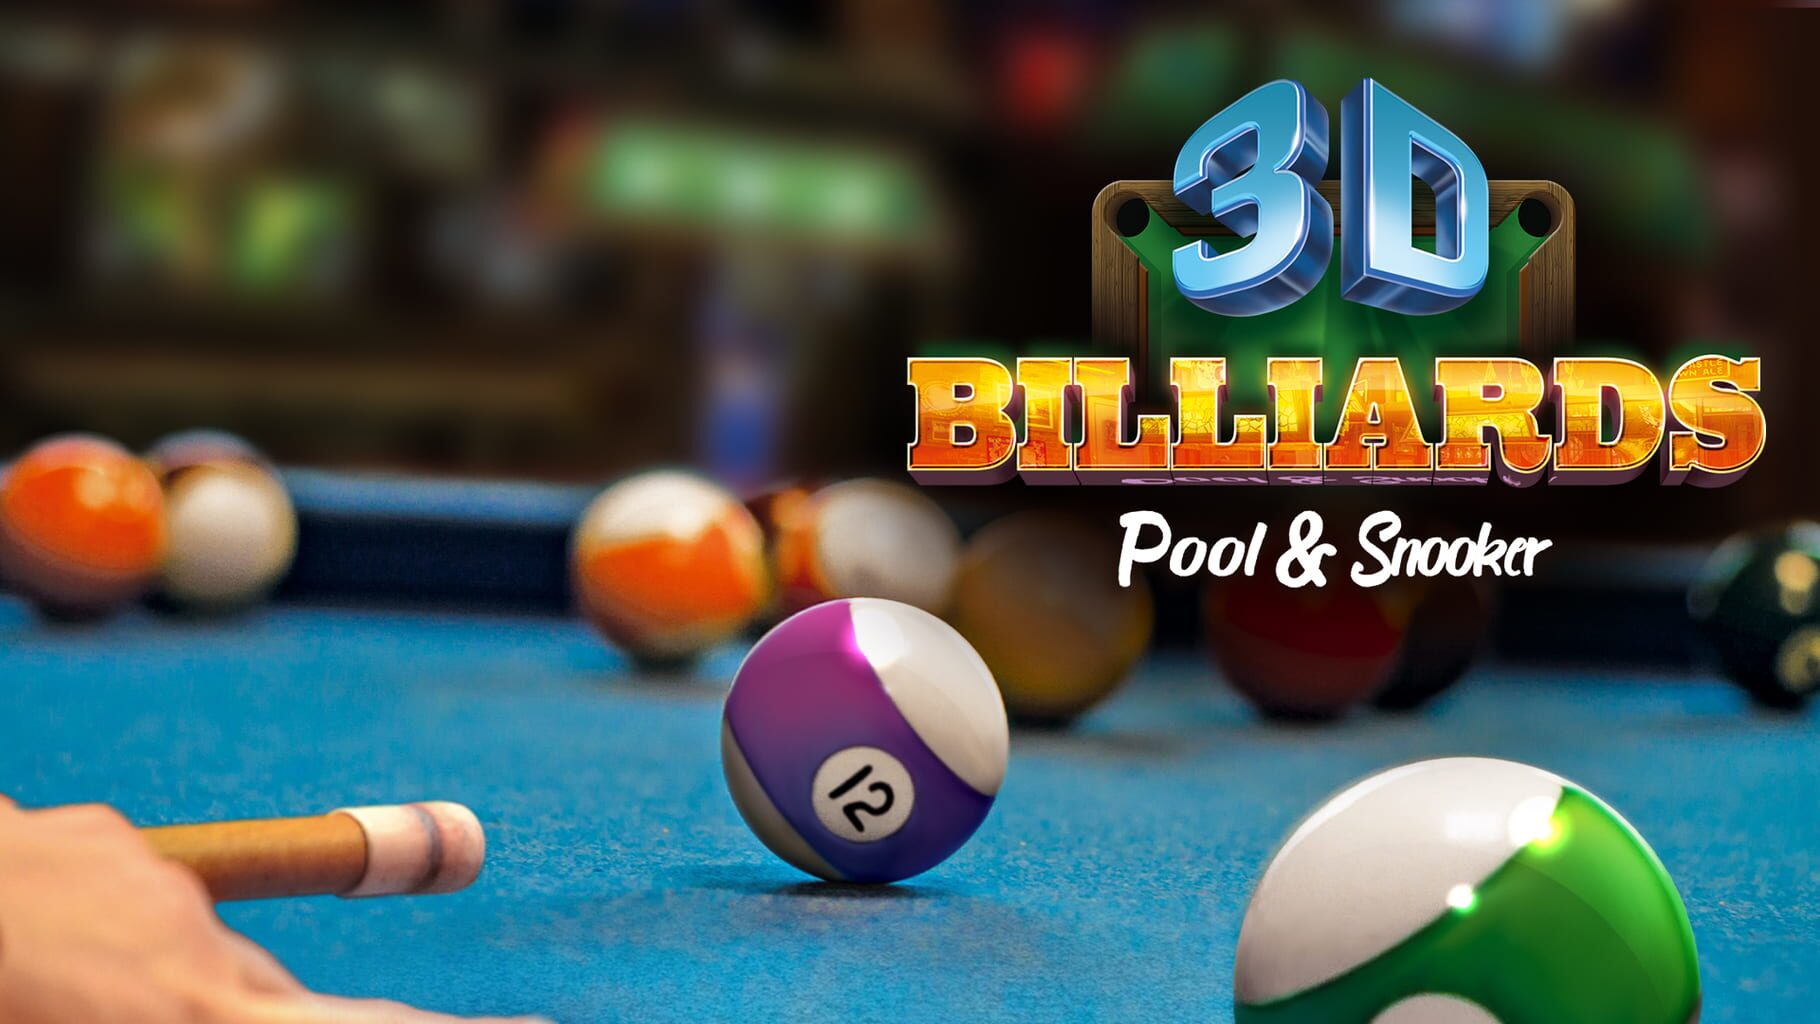 3D Billiards: Pool & Snooker artwork